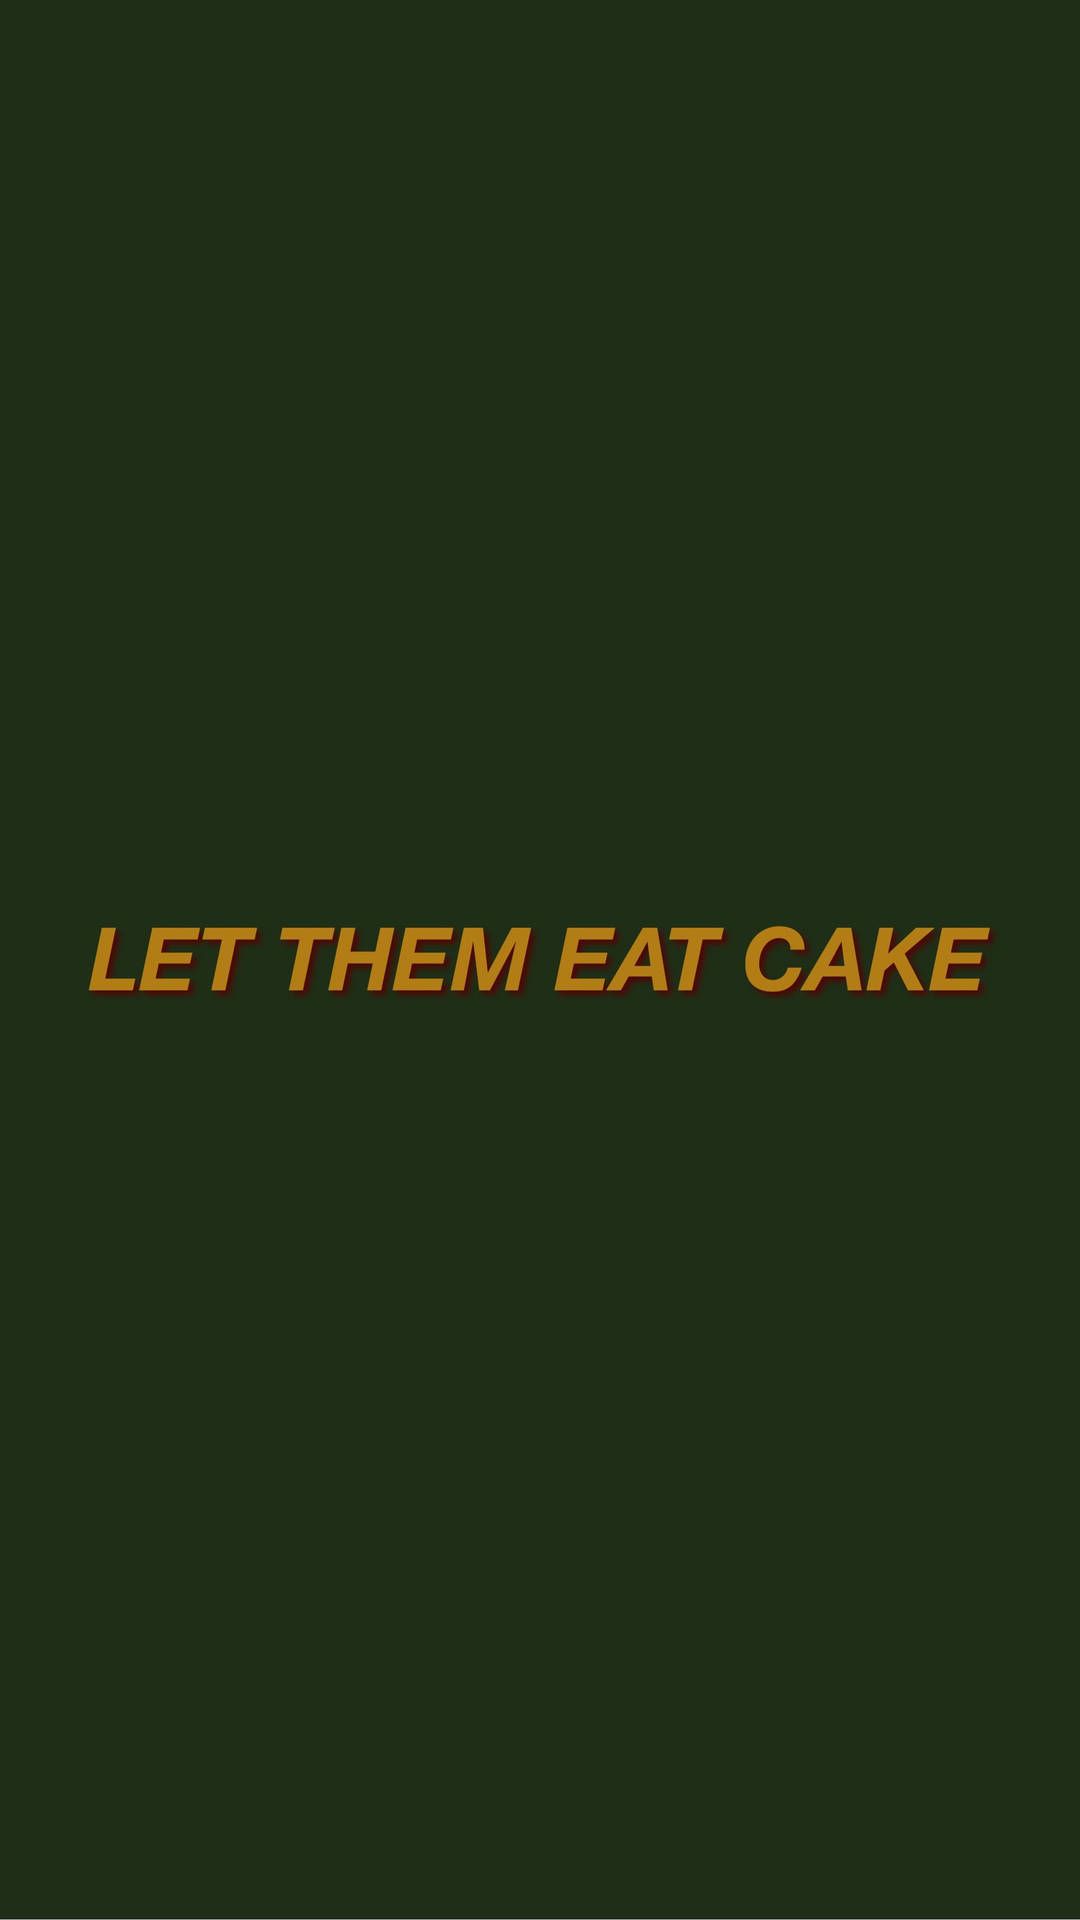 Eat Cake Quote Plain Green Wallpaper